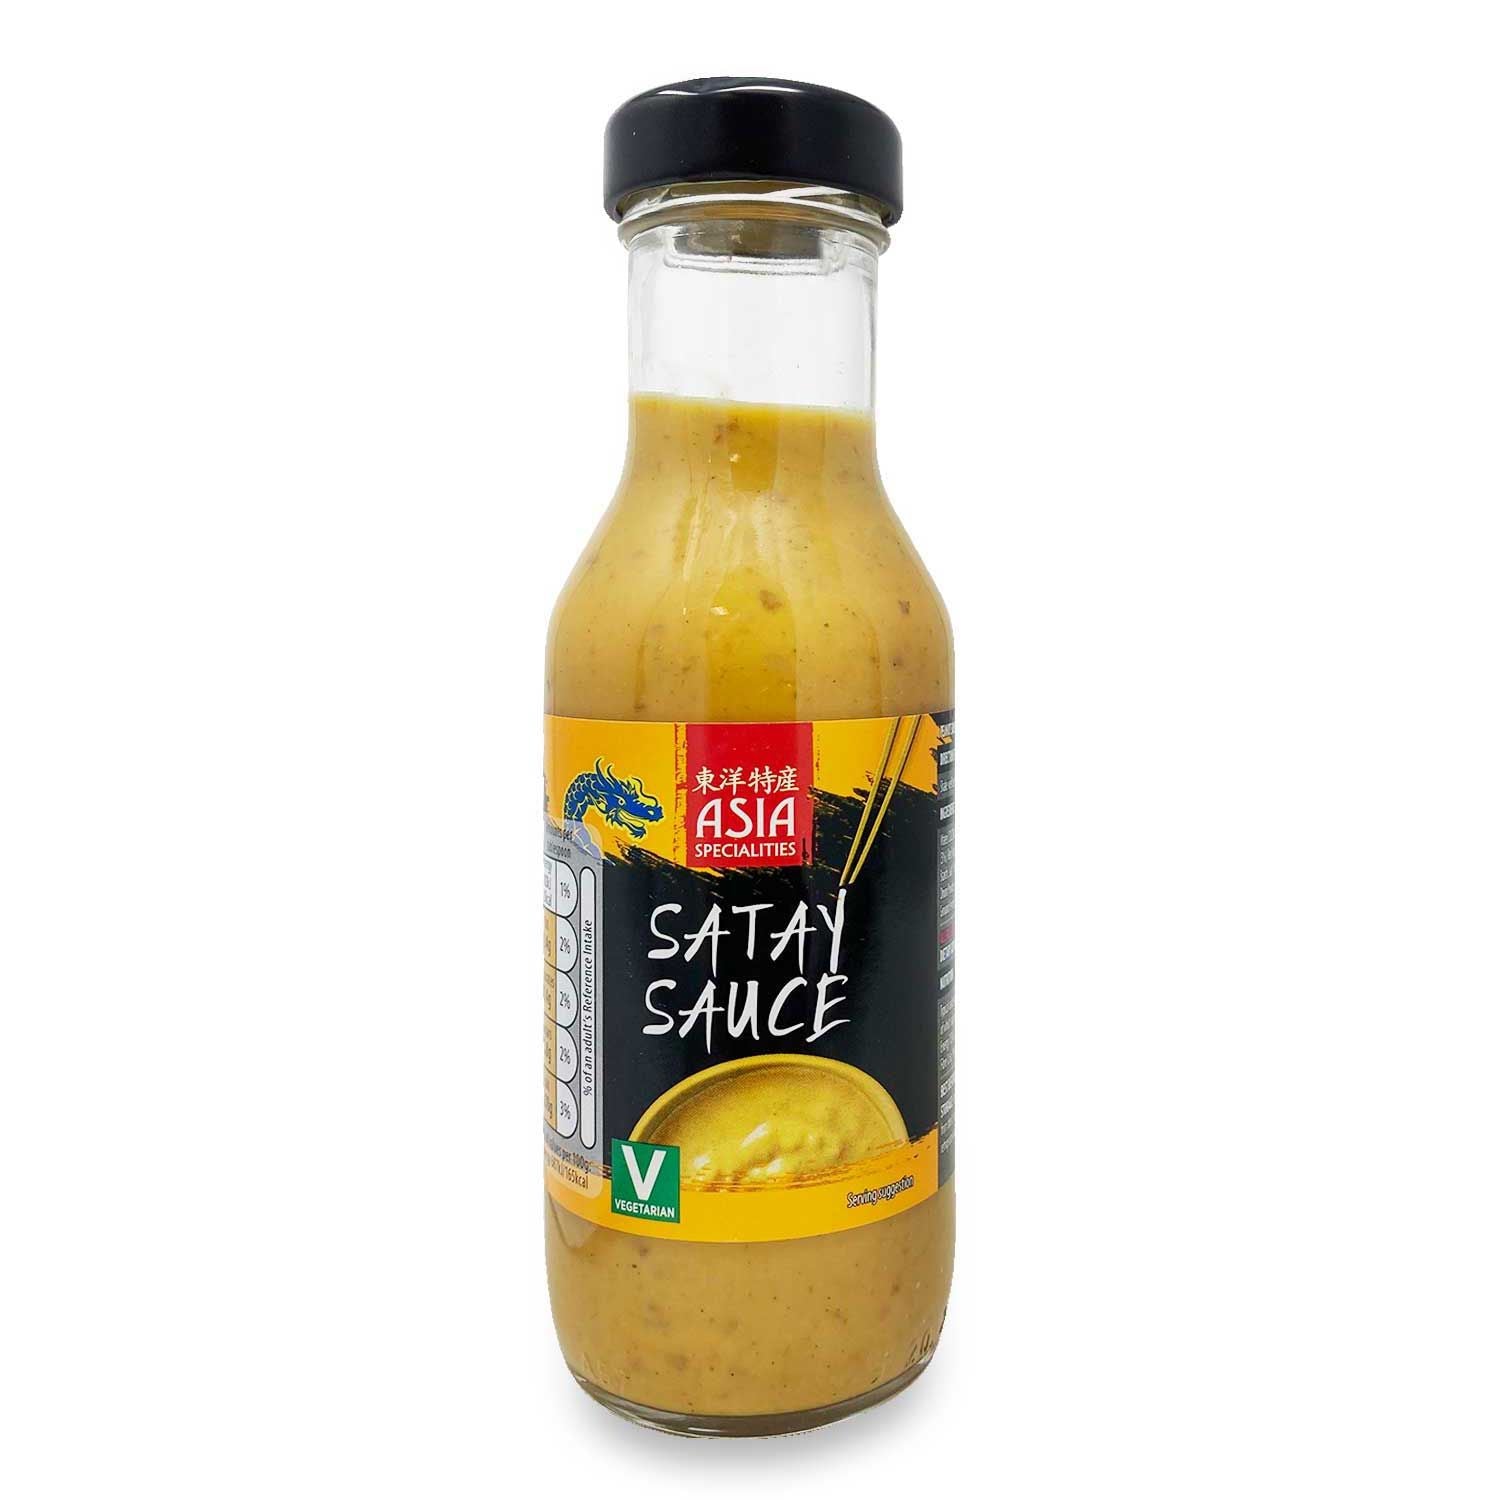 Asia Specialities Satay sauce 280g